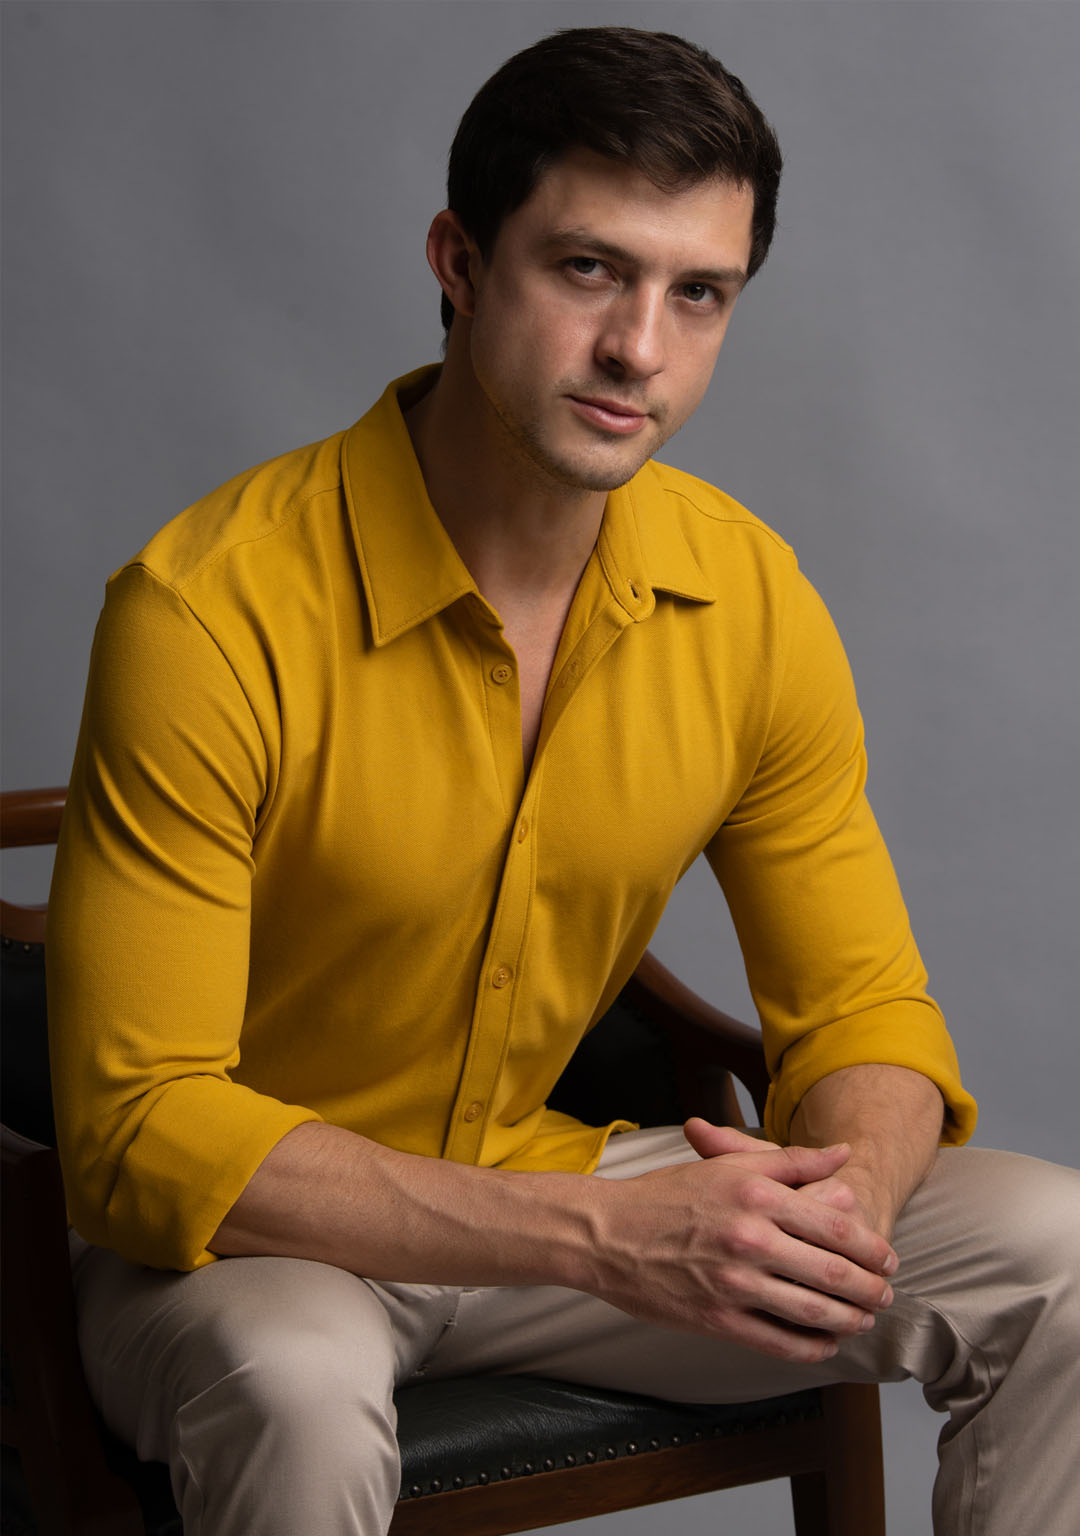 Rajkummar Rao's yellow panel shirt and white pants worth Rs. 9900 are  perfect for haldi ceremony 9900 : Bollywood News - Bollywood Hungama